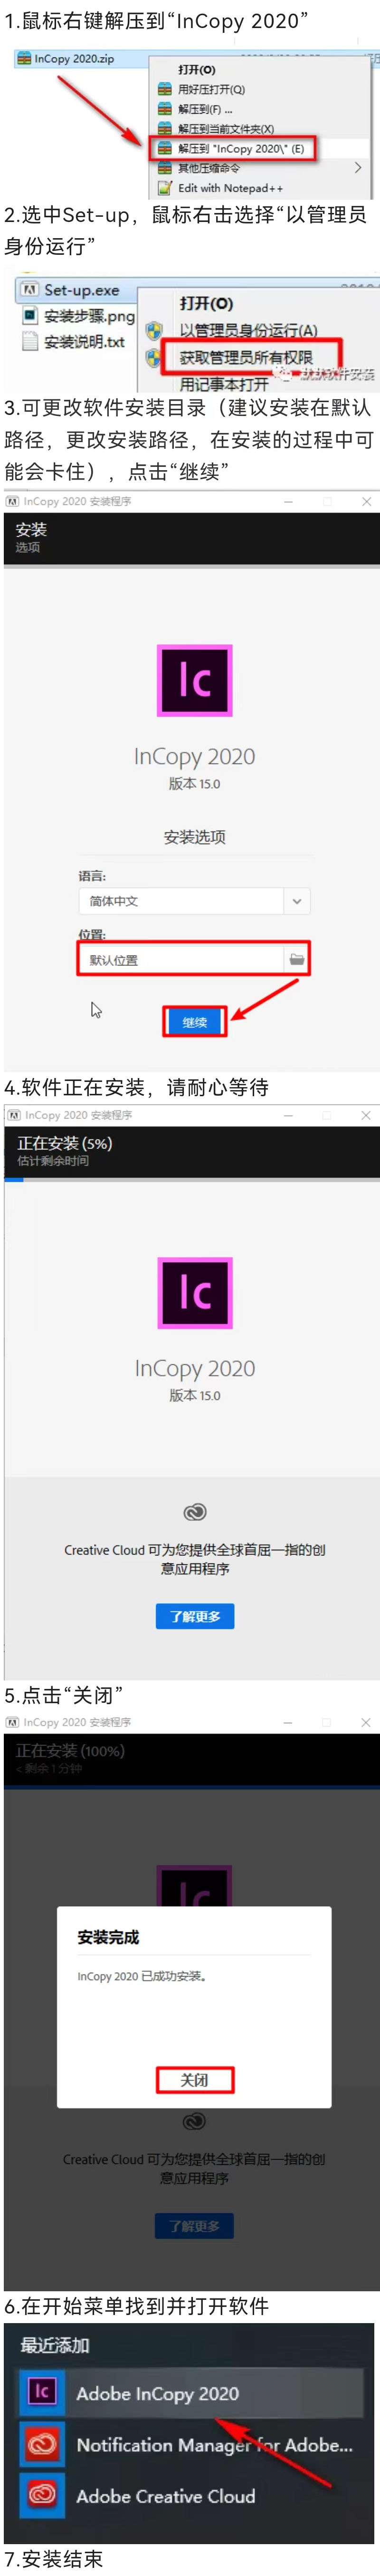 Adobe InCopy 2020װ̳.jpg